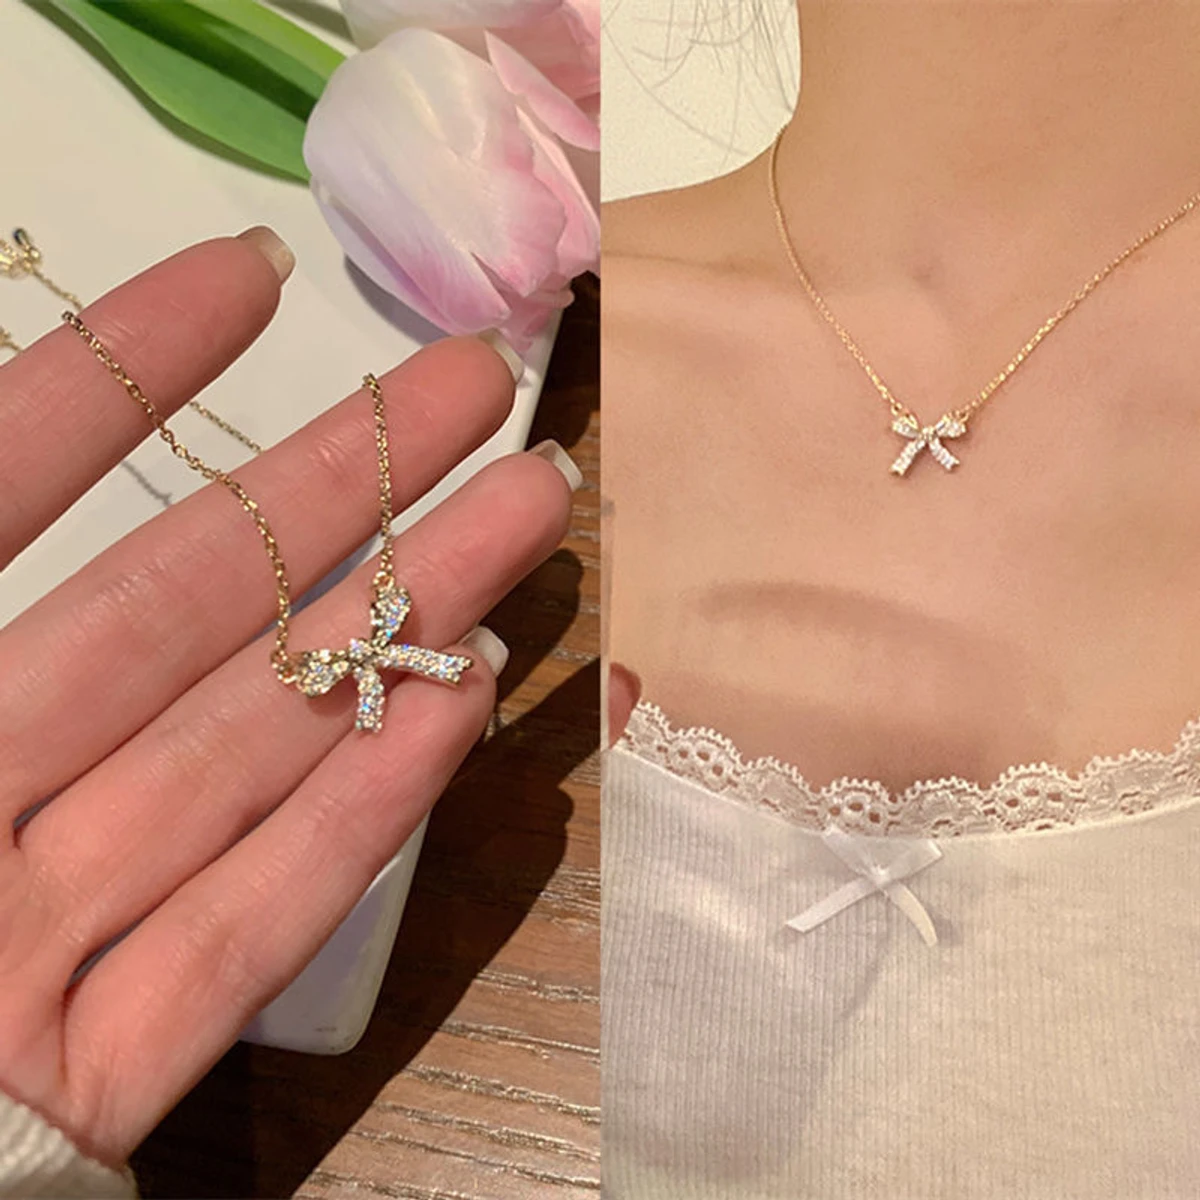 Necklace Neck Jewelry Locket for Women Girls